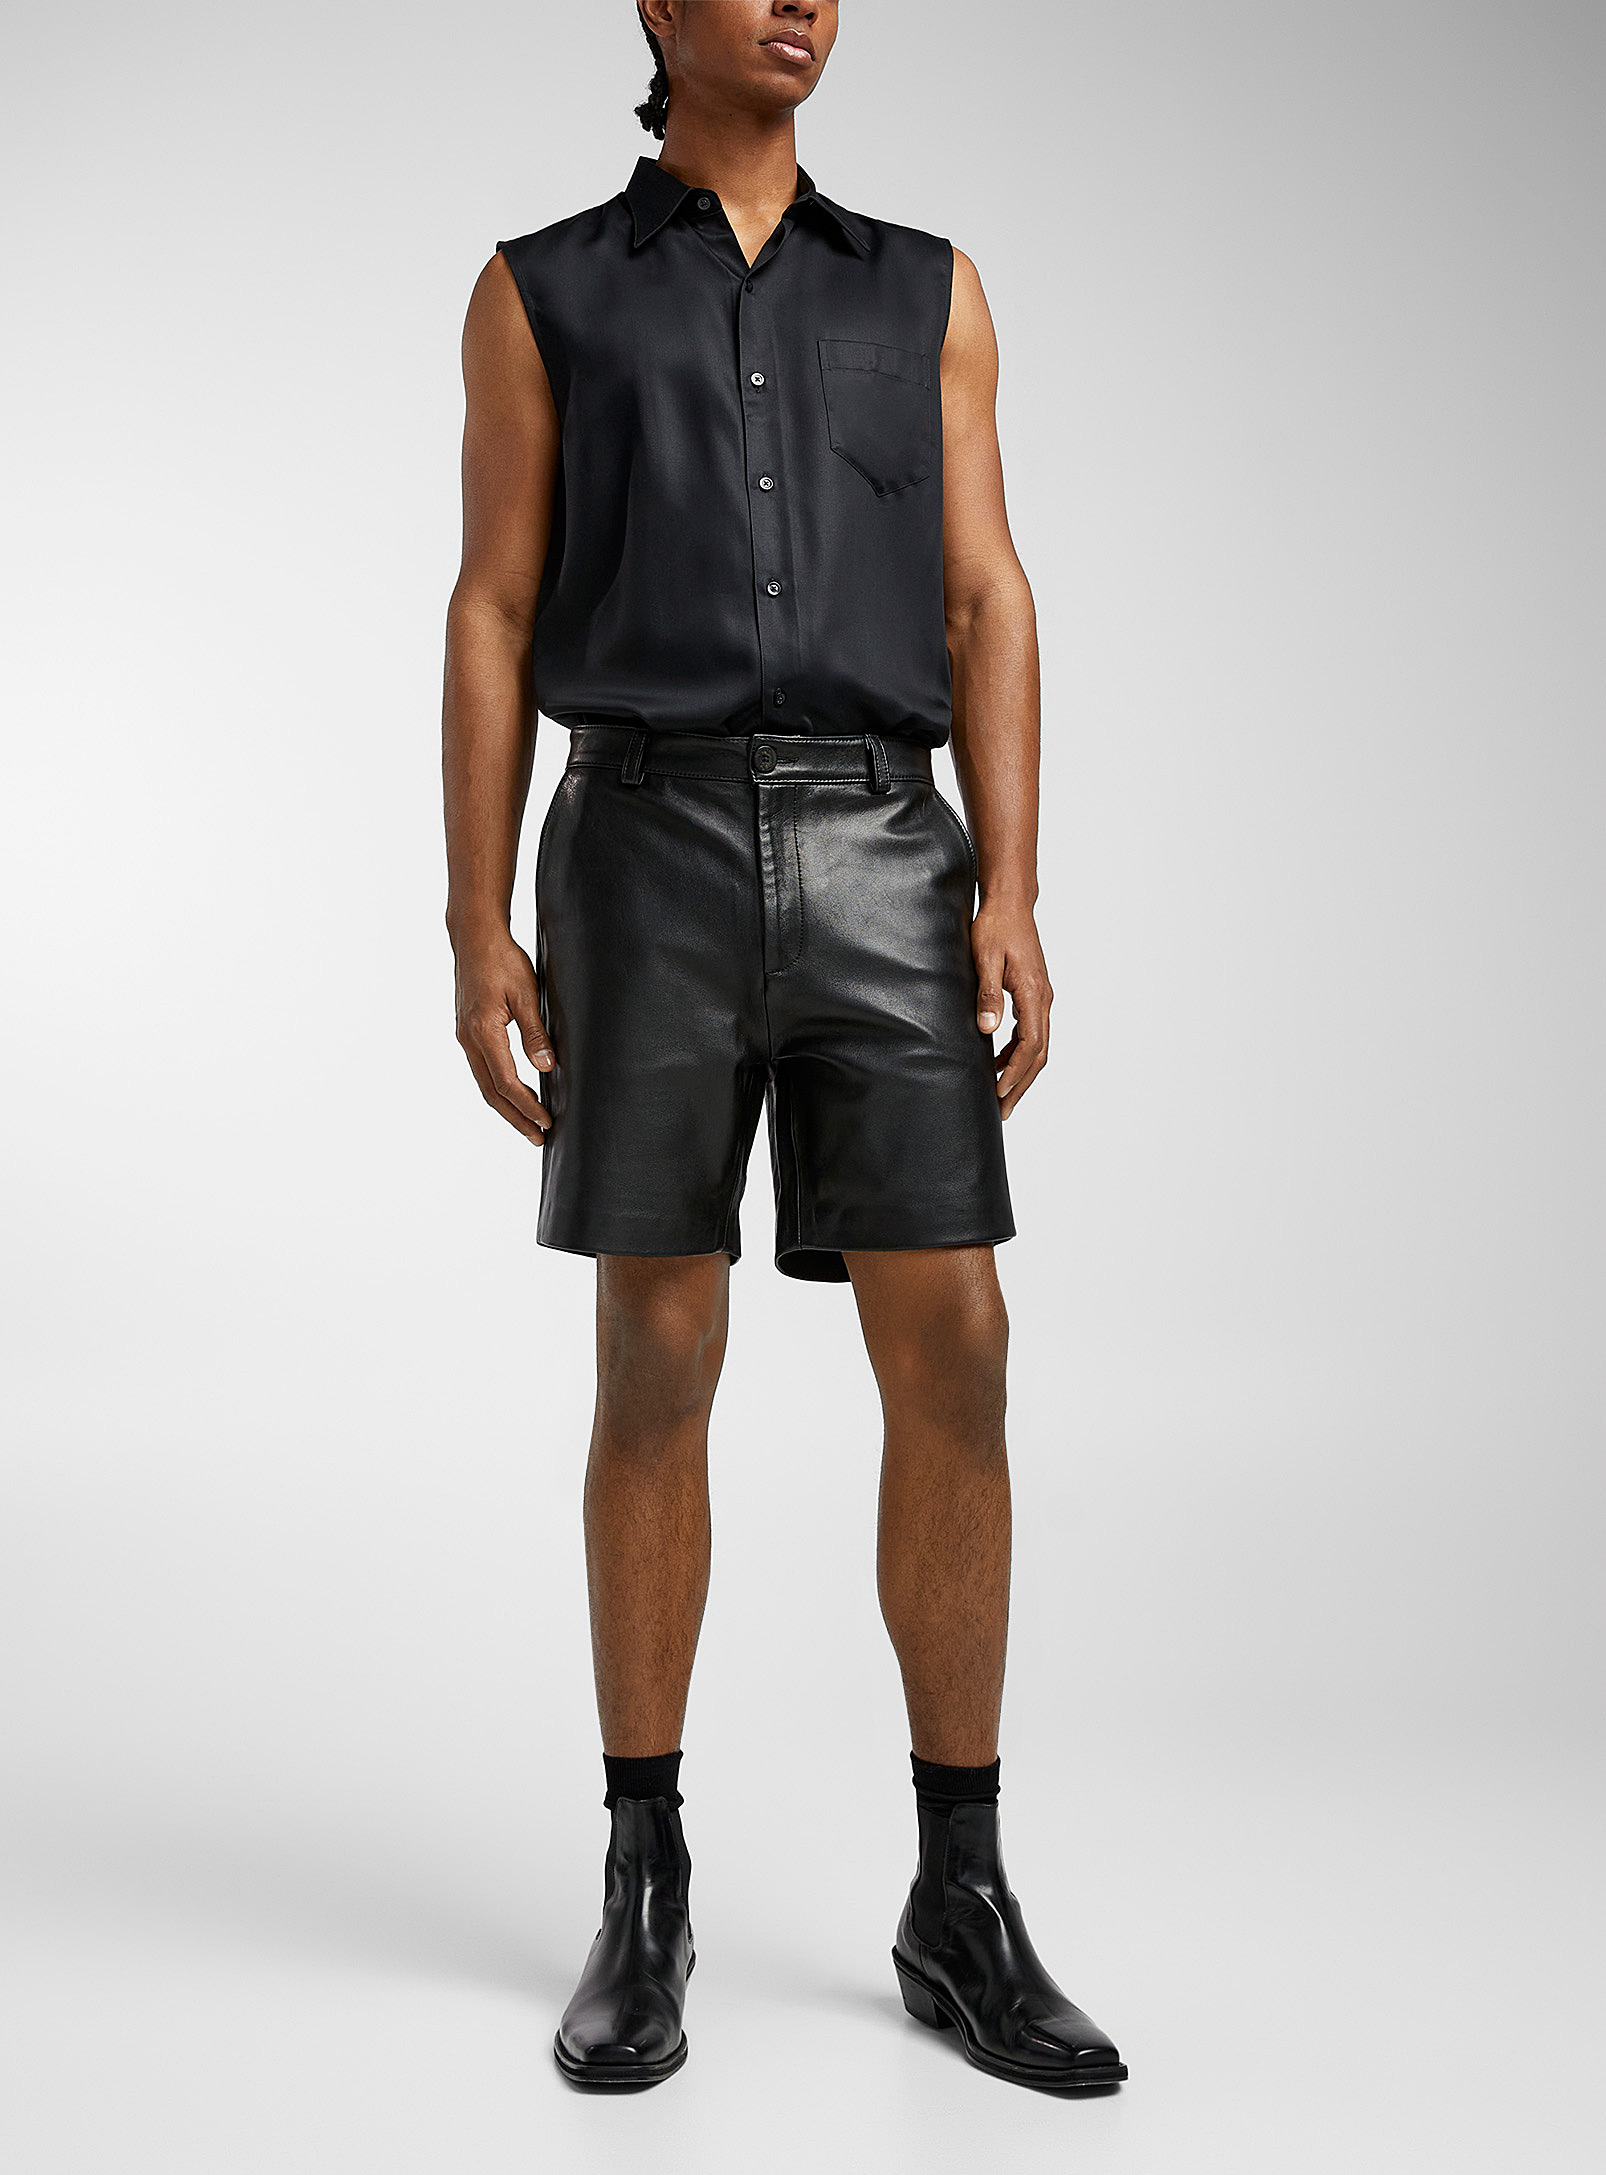 Ernest W. Baker - Men's Genuine leather black short